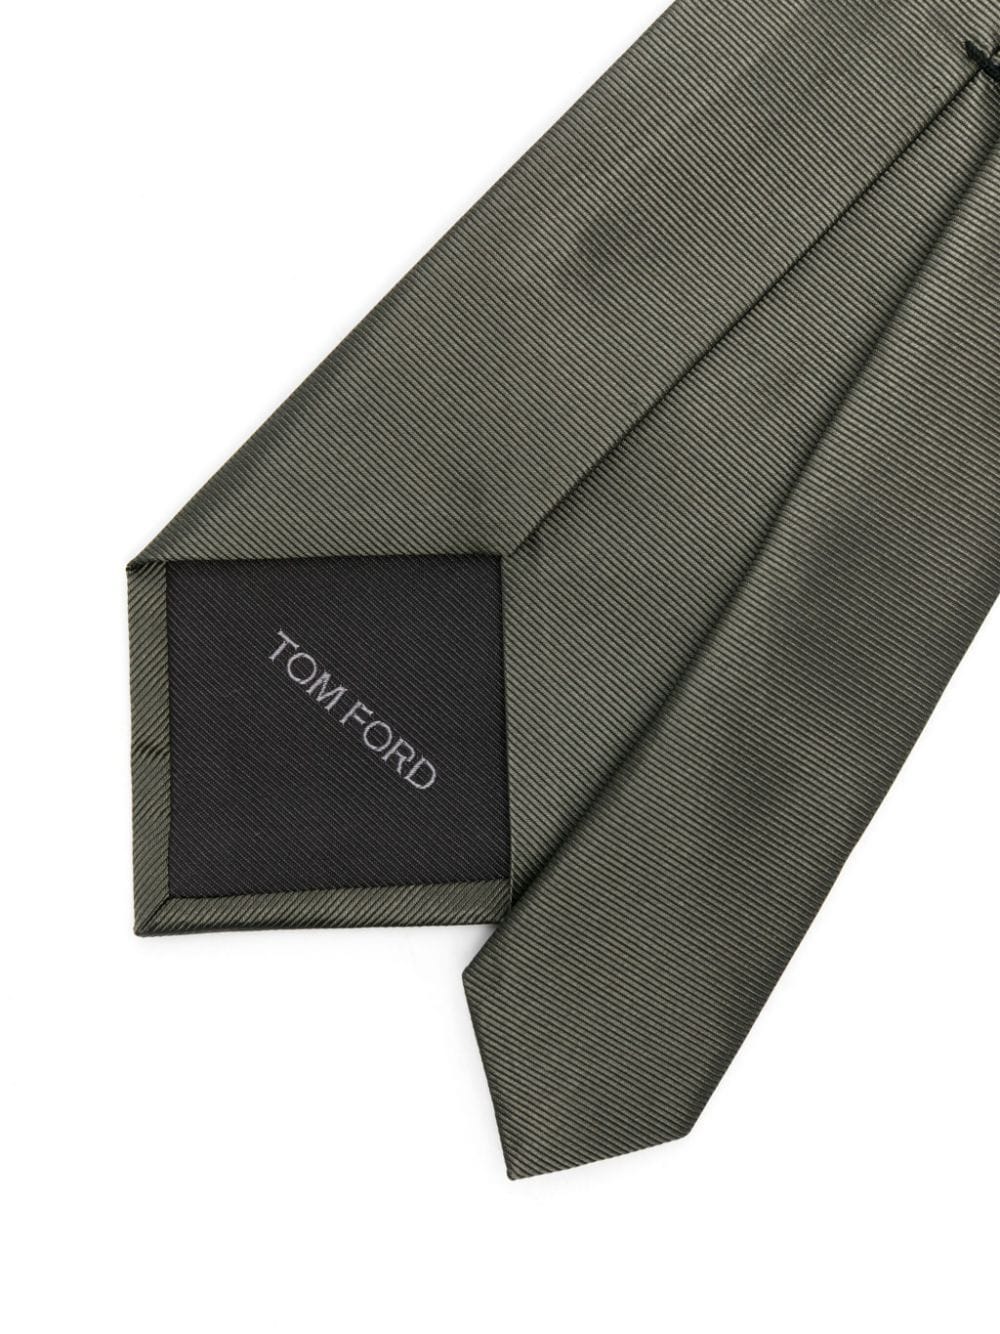 TOM FORD stripe-jacquard silk tie - Groen